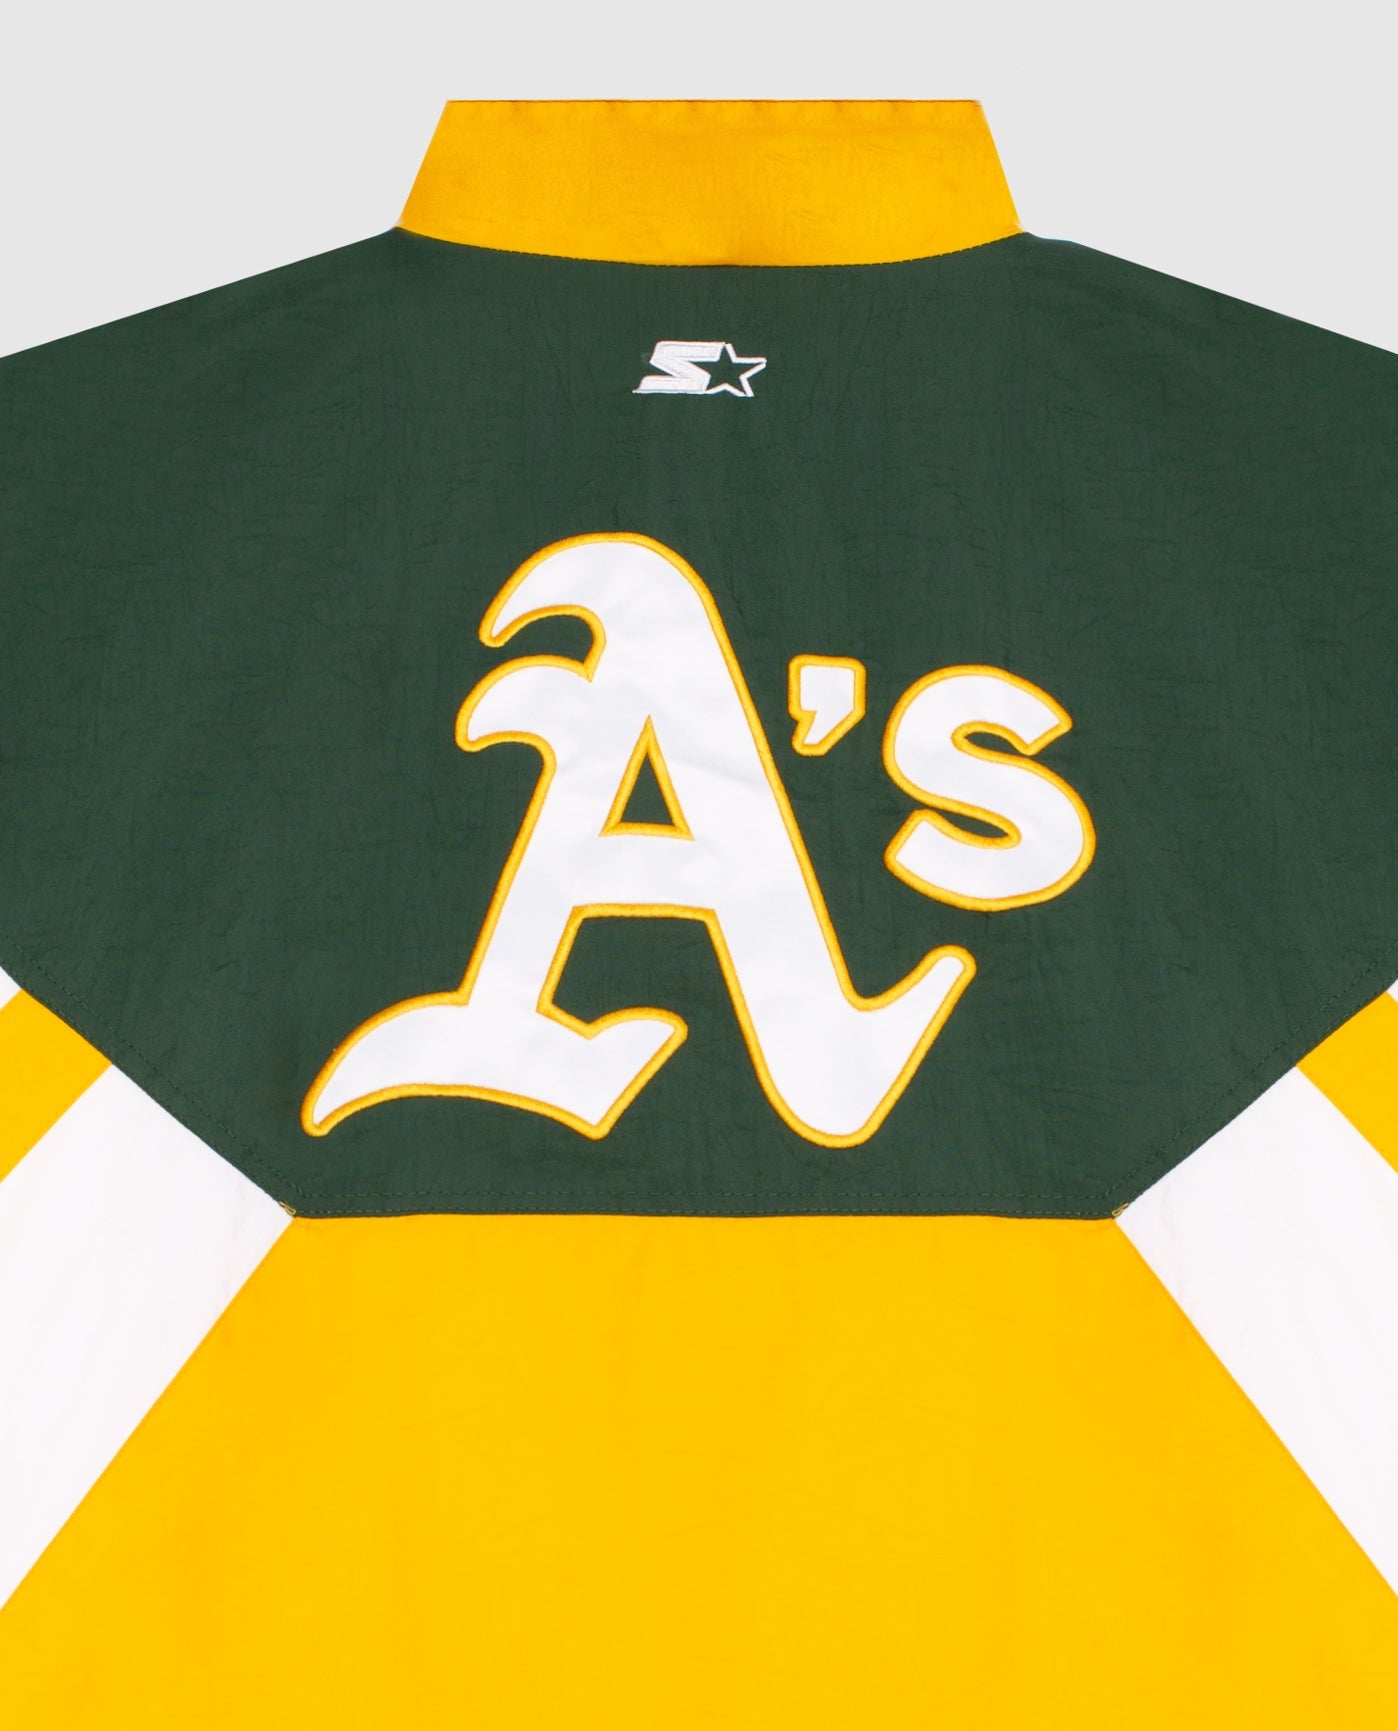 Oakland Athletics Baseball Vintage Sports Shirts for sale